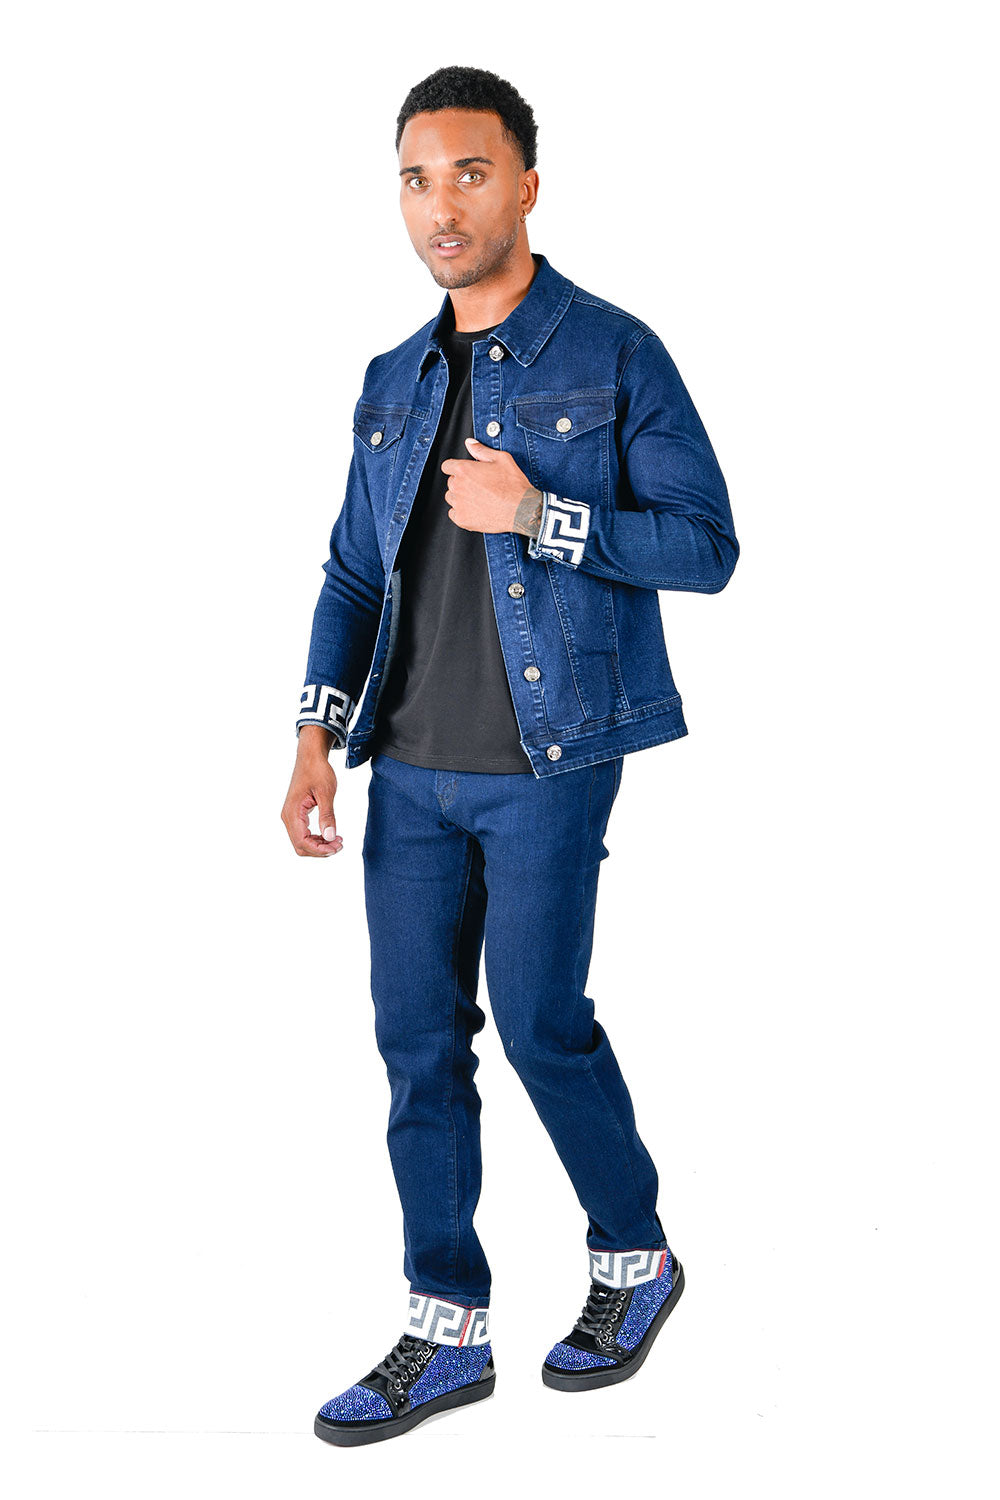 BARABAS Men's Greek Key Pattern Design Luxury Denim Jacket JV855 Blue